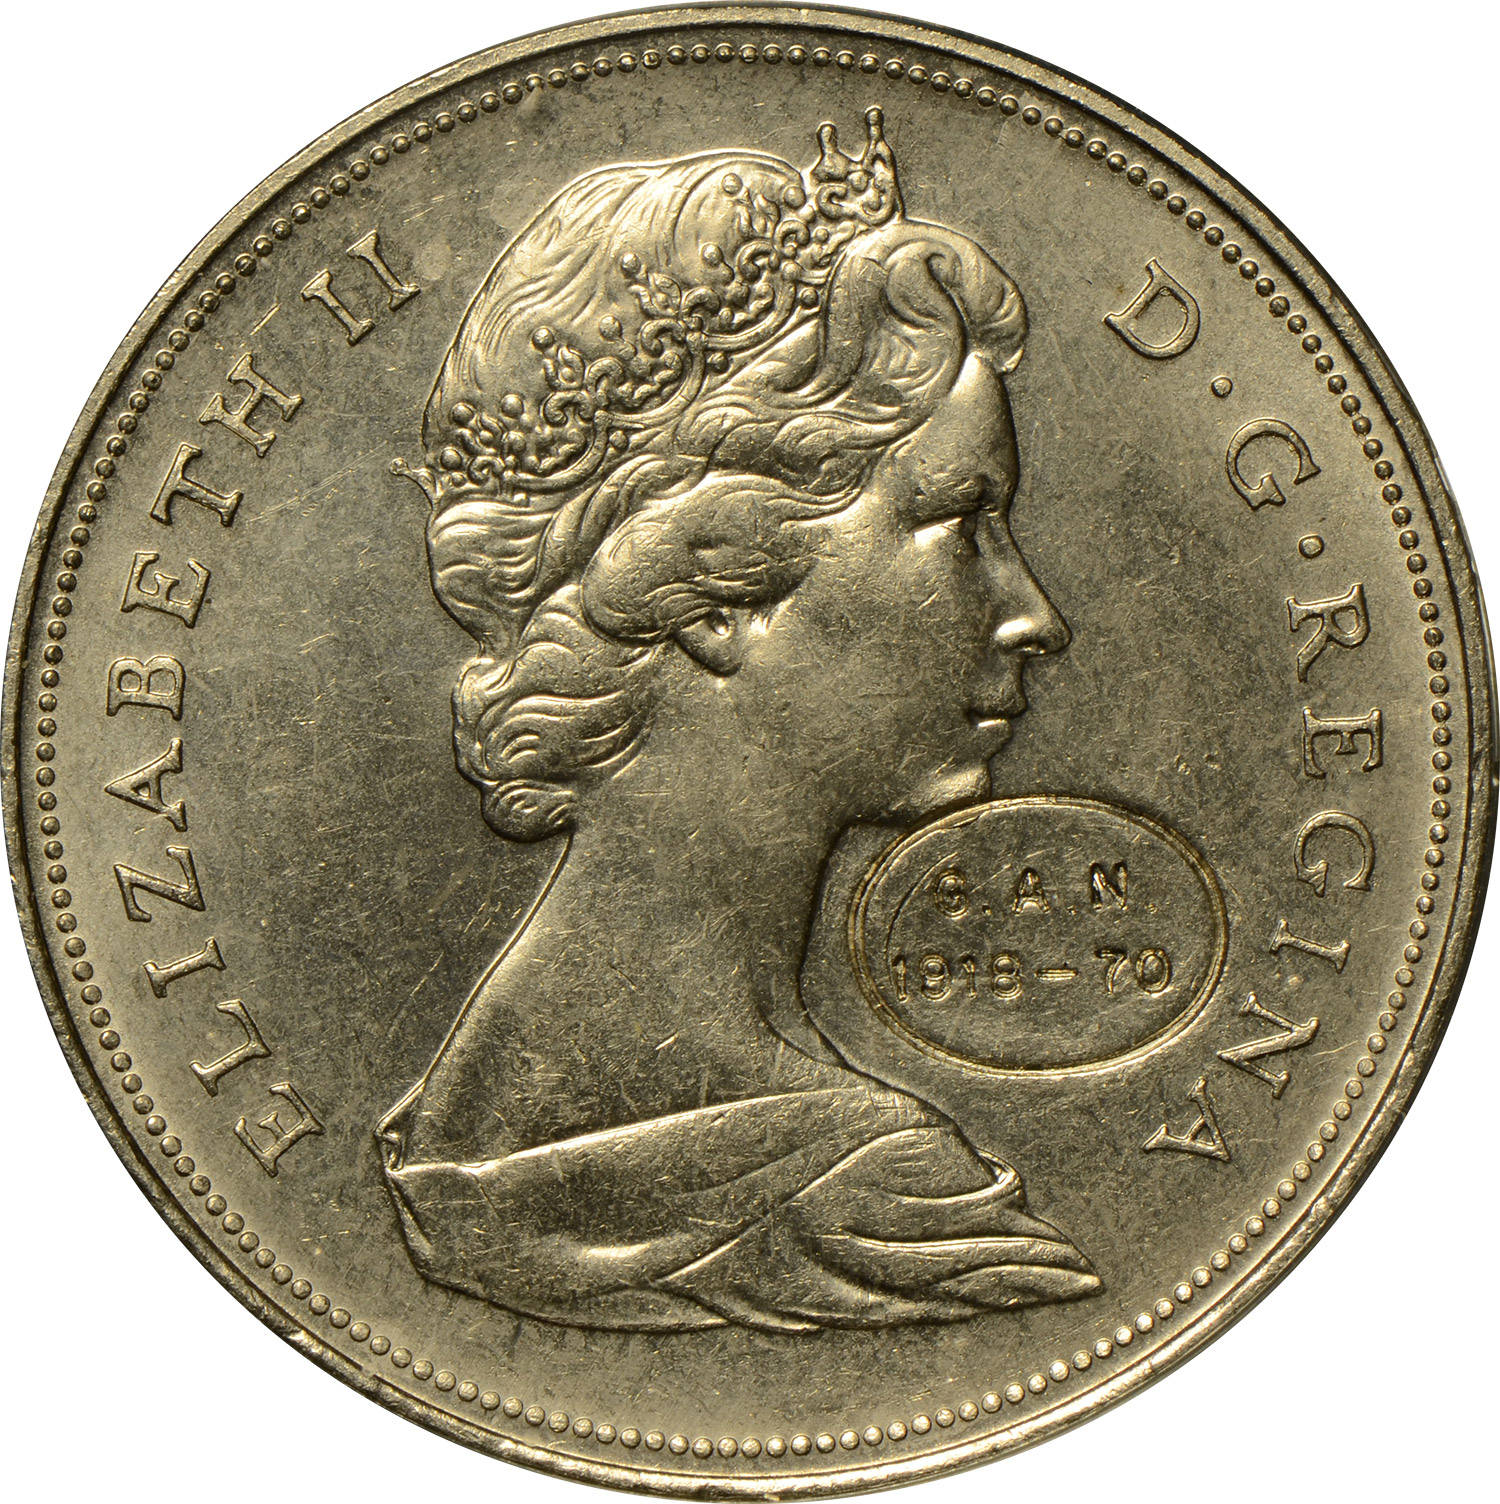 1970 Canadian Prooflike Nickel Dollar $1.00 -Celebrating Manitoba's Centennial 